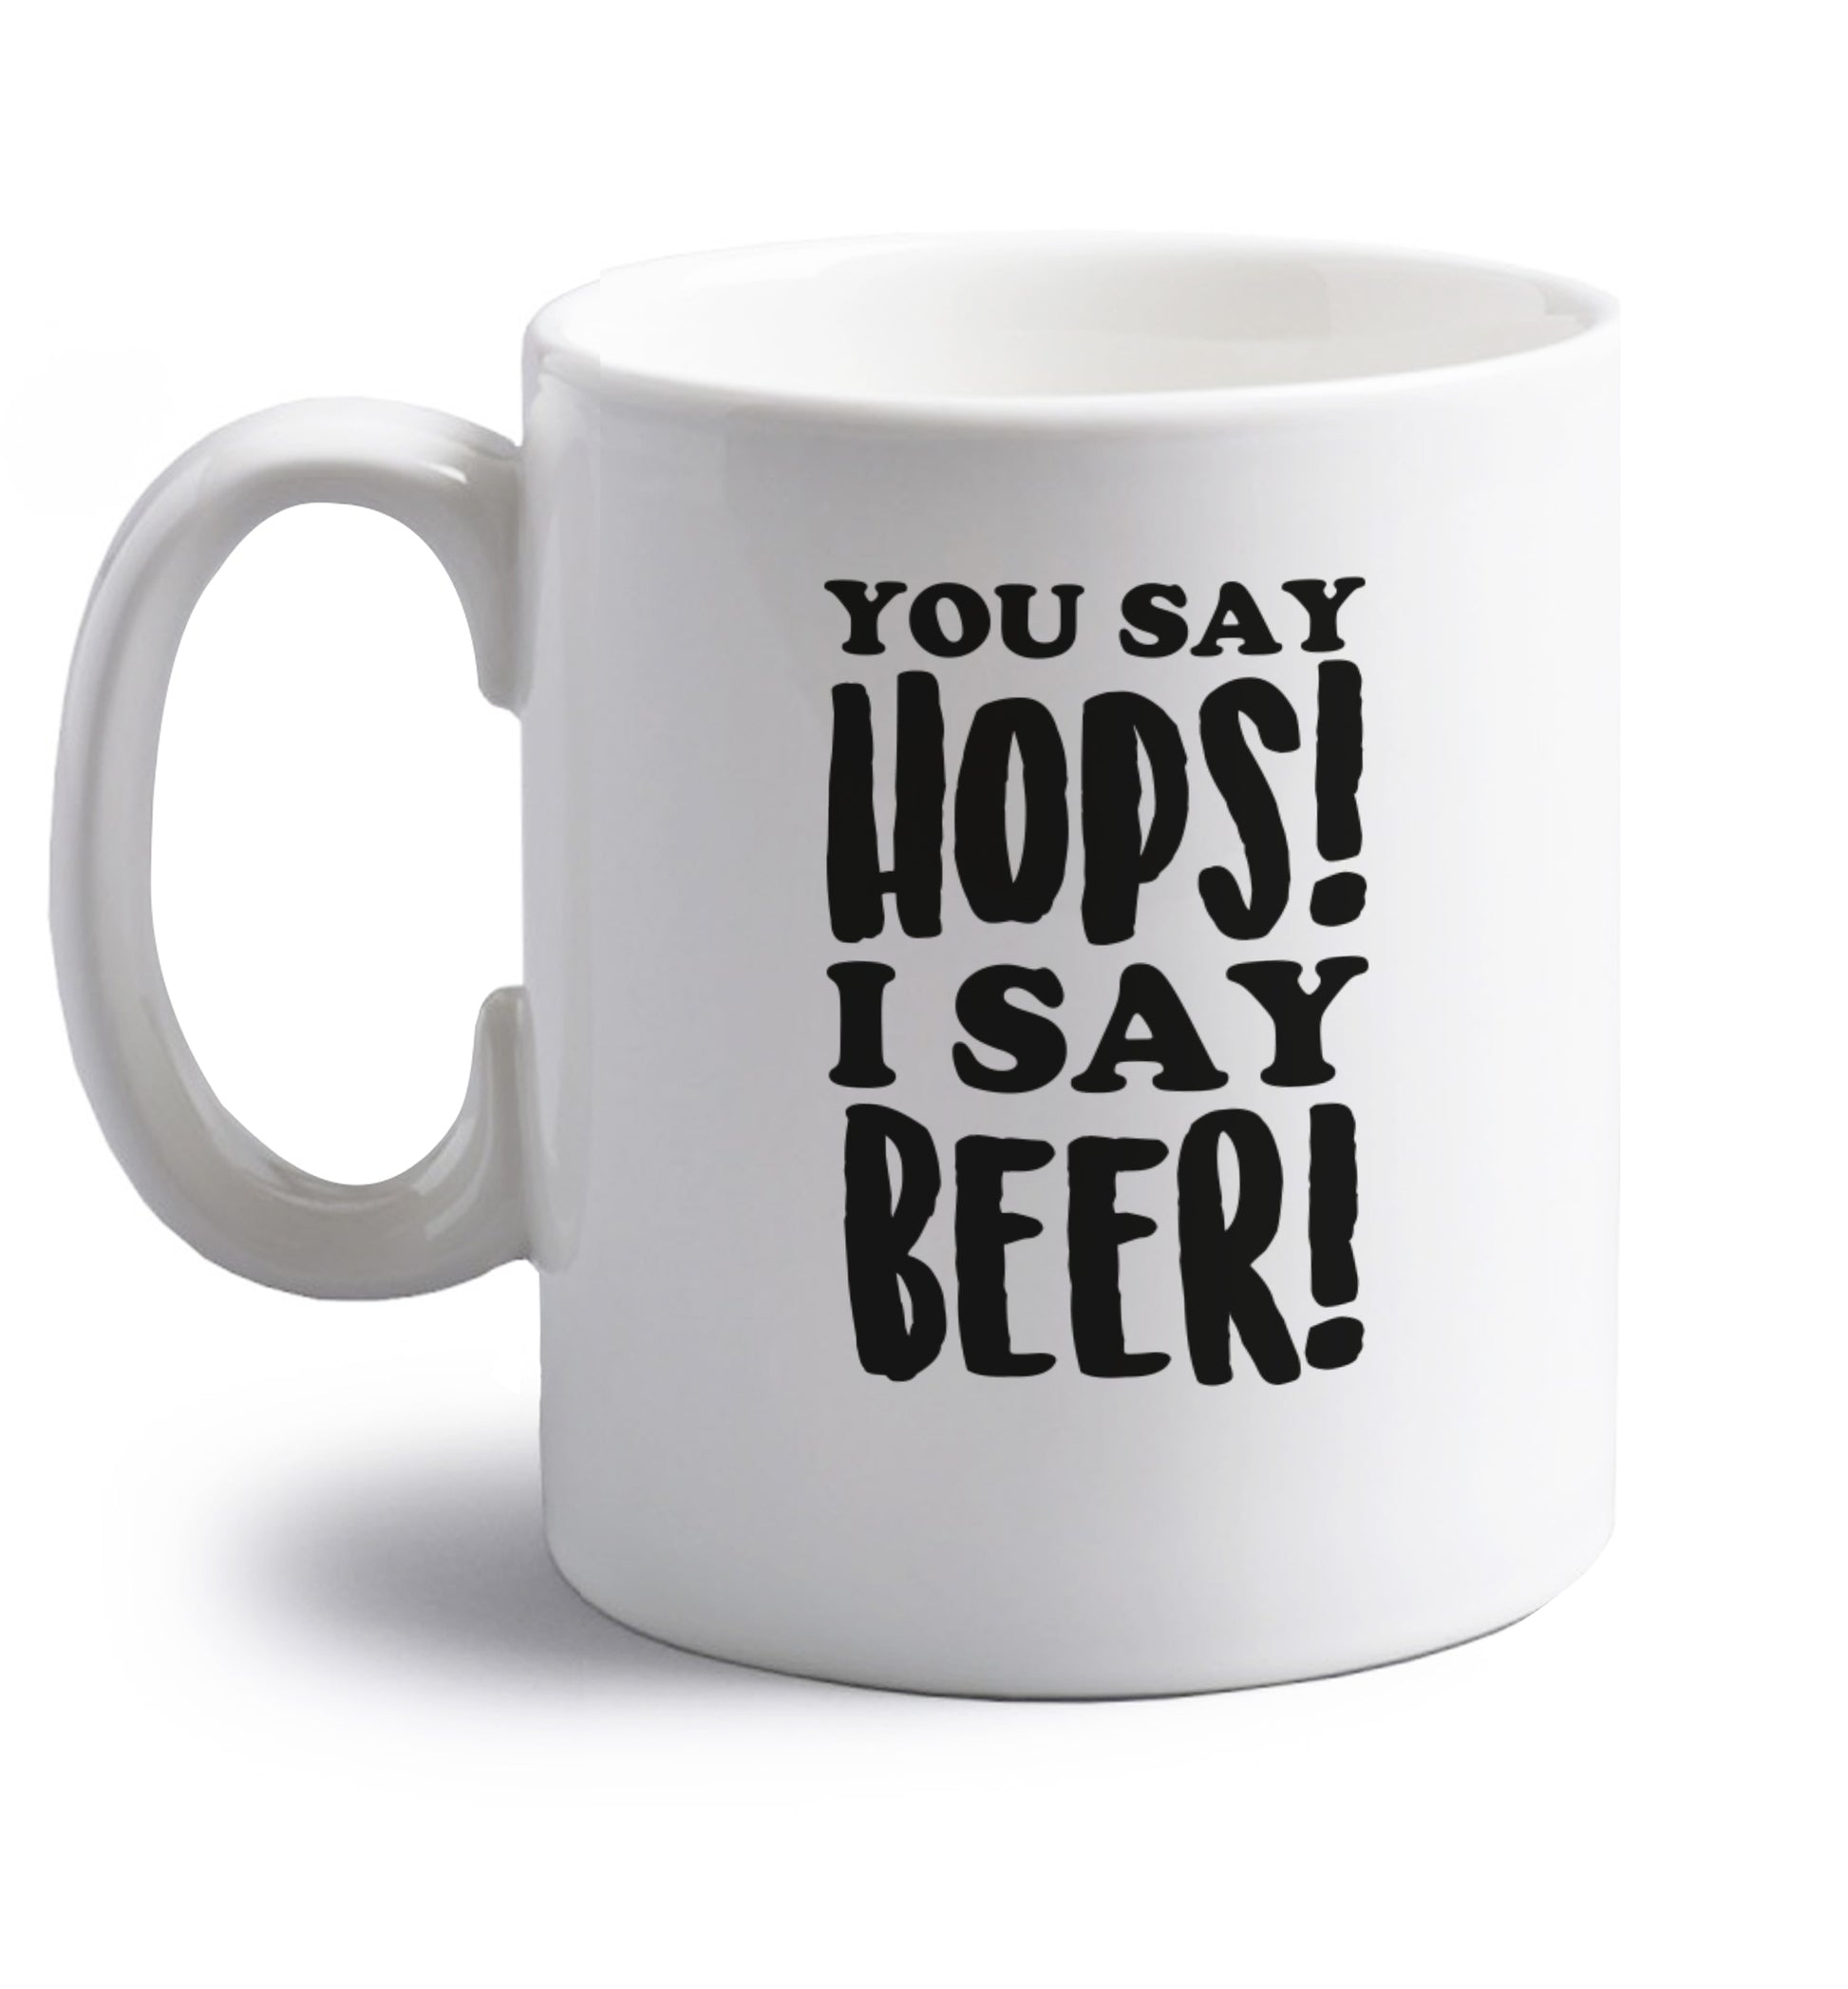 You say hops I say beer! right handed white ceramic mug 